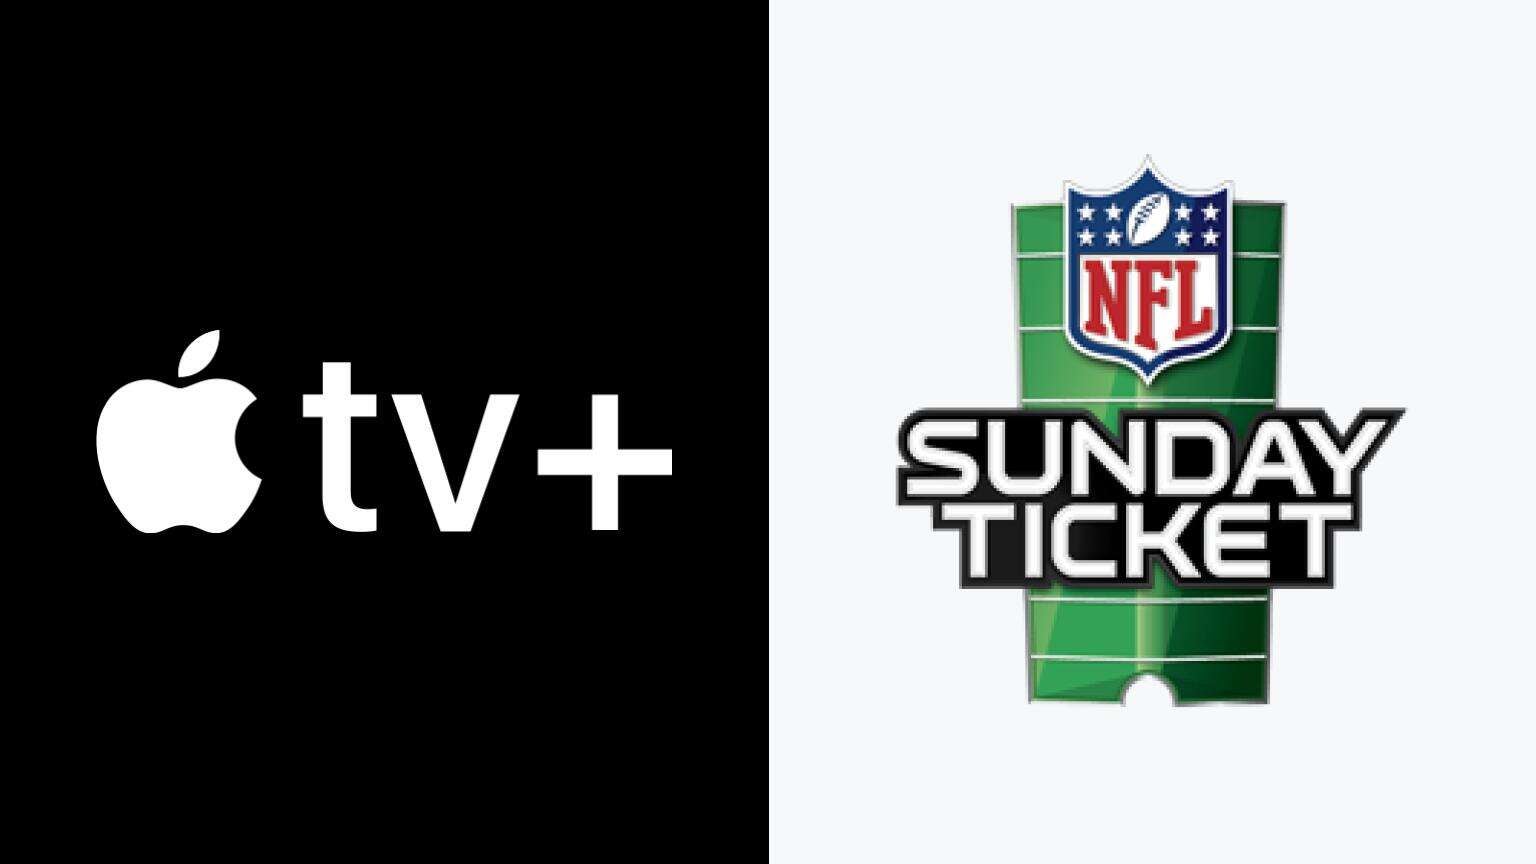 DirecTV bringing NFL Sunday Ticket to Apple TV, Boxee and Roku?